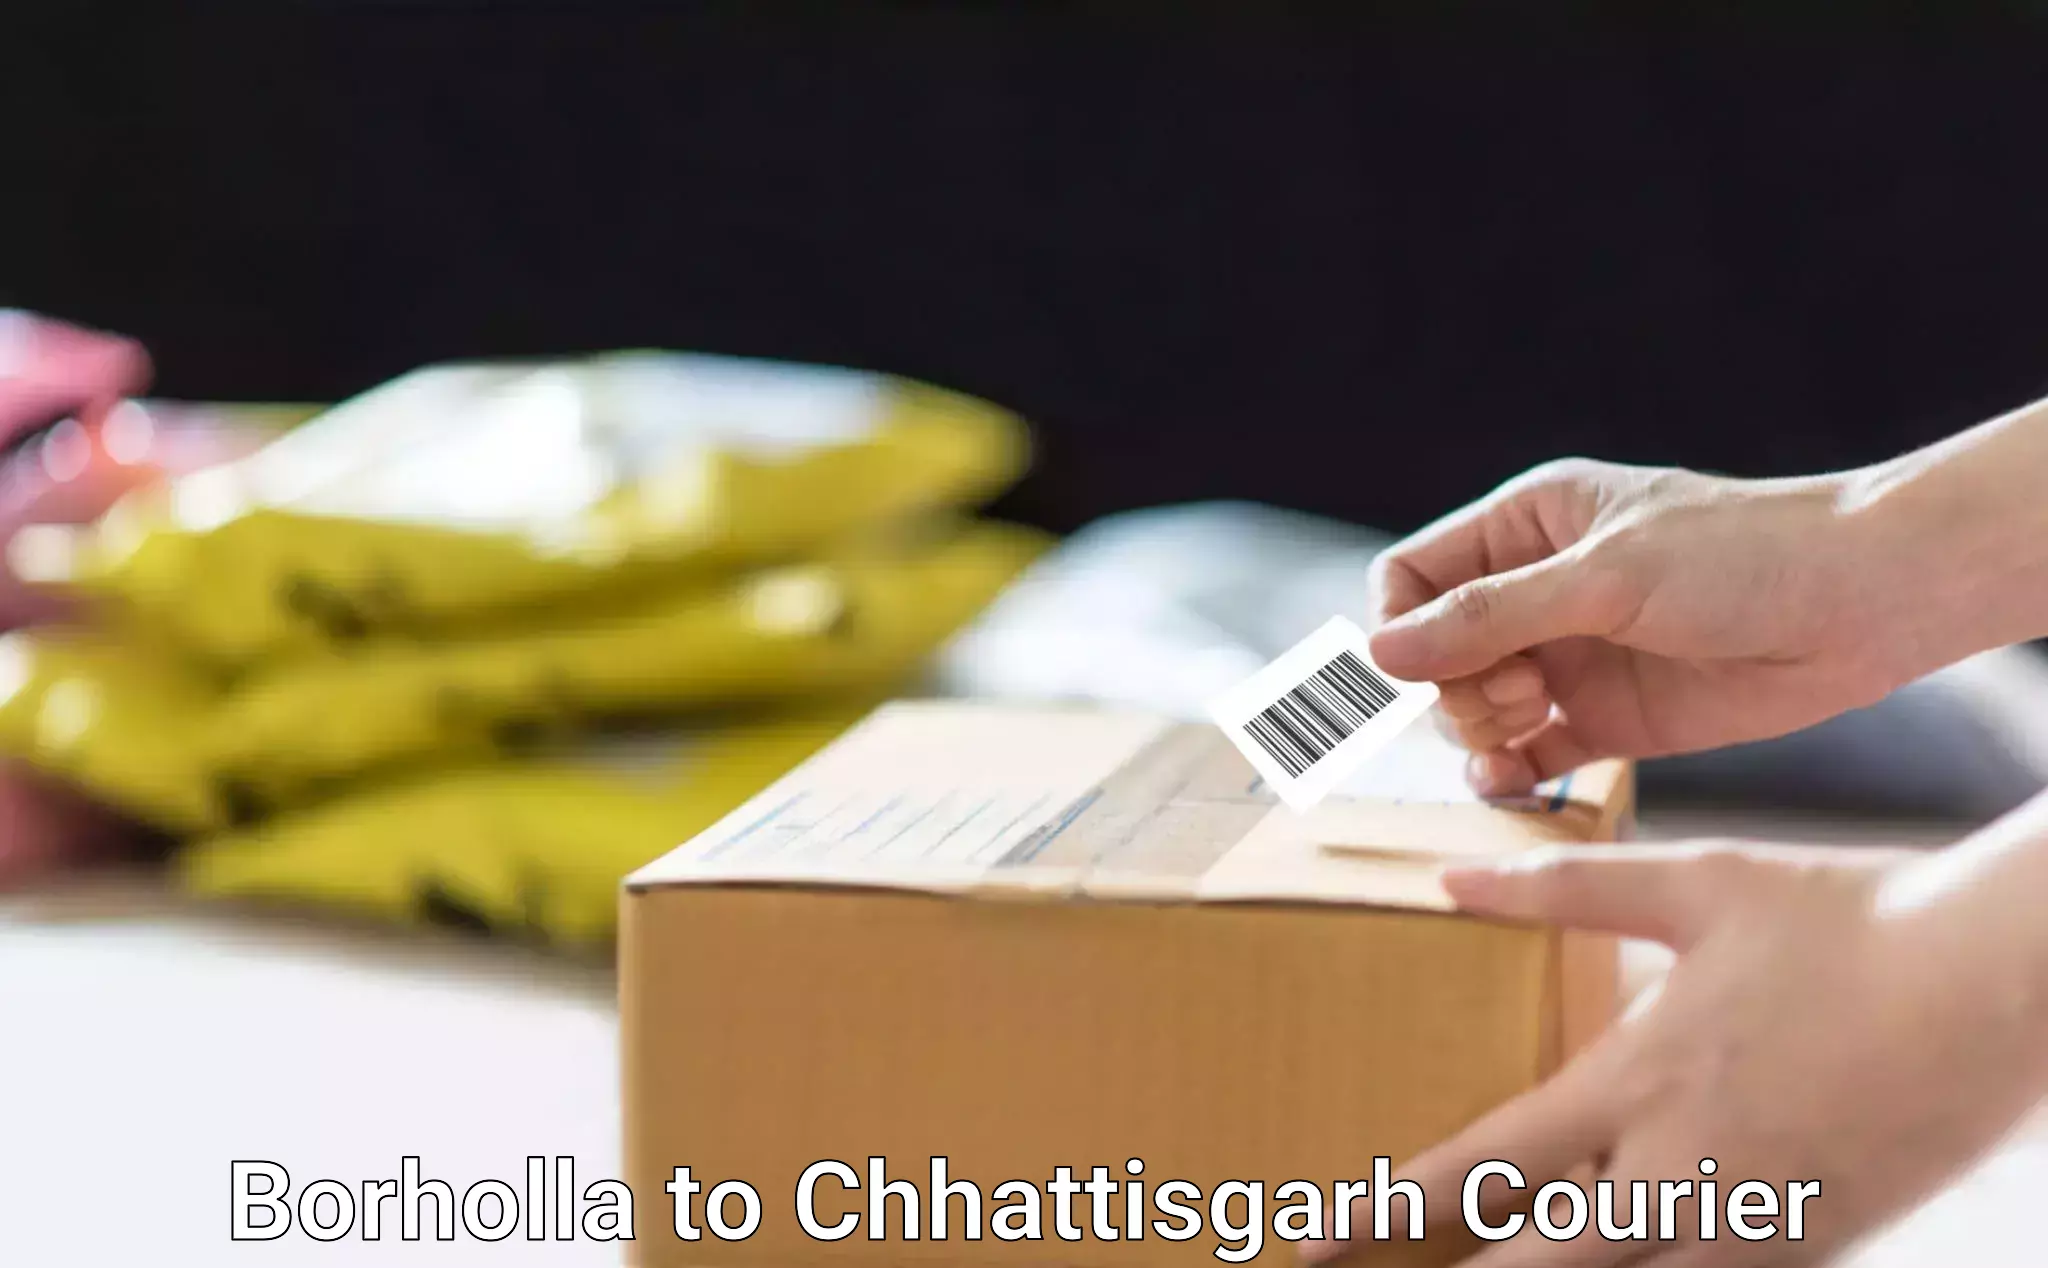 Courier service partnerships in Borholla to Patna Chhattisgarh